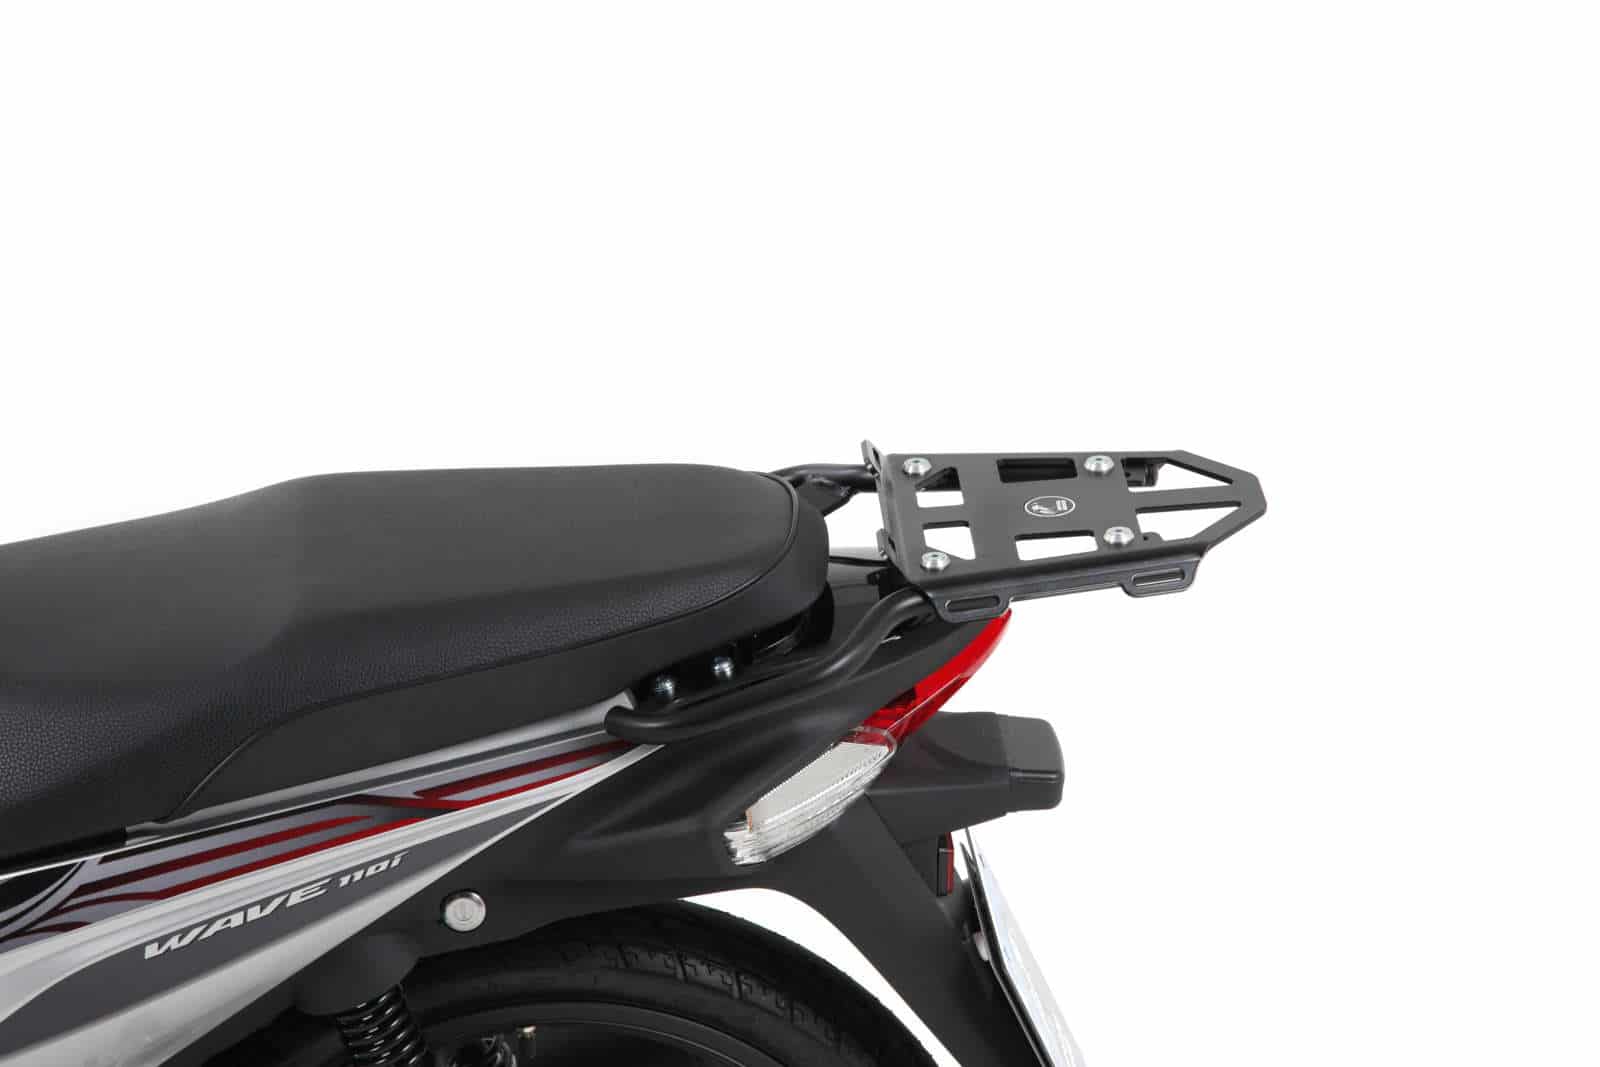 Minirack Softgepäck-Heckträger schwarz für Honda Wave 110 i (2012-)